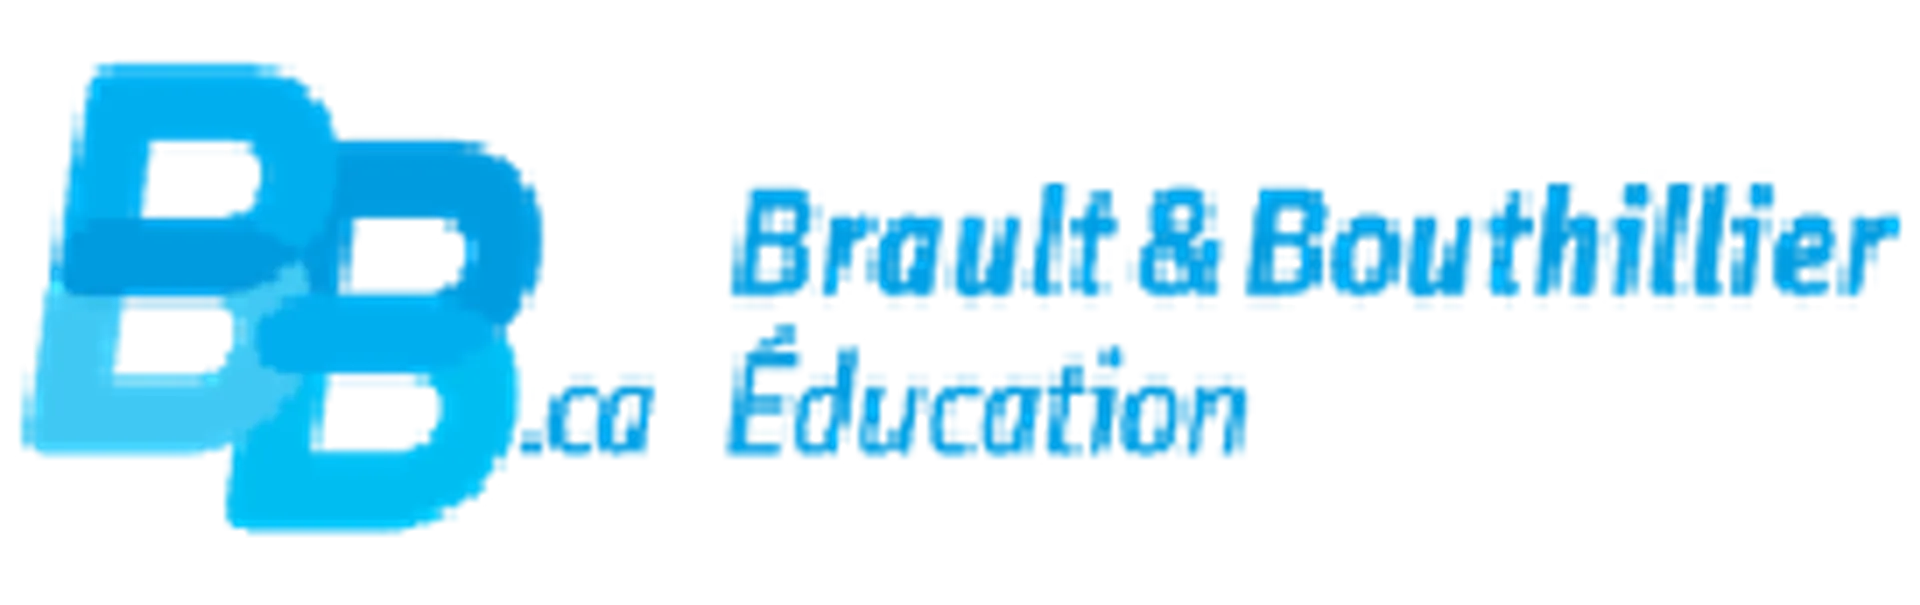 BRAULT & BOUTHILLIER logo de circulaire